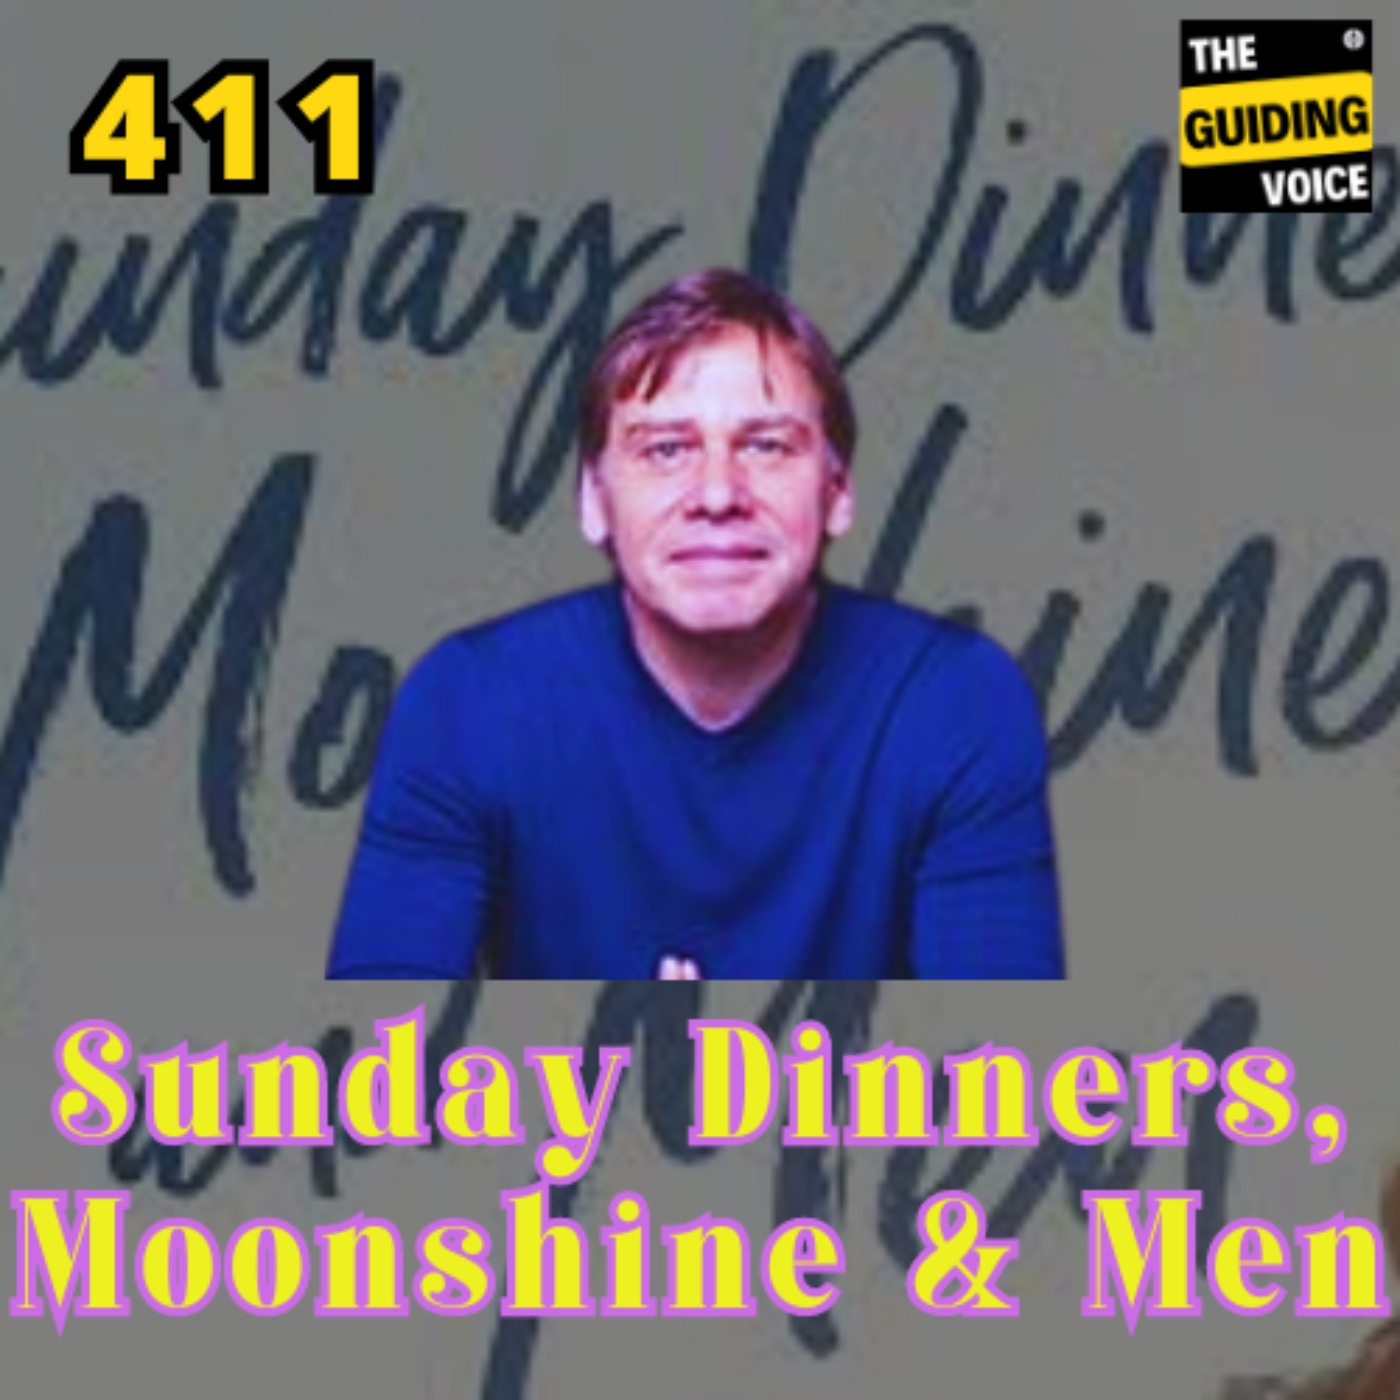 Sunday Dinners, Moonshine & Men  | Tate Barkley | #TGV411